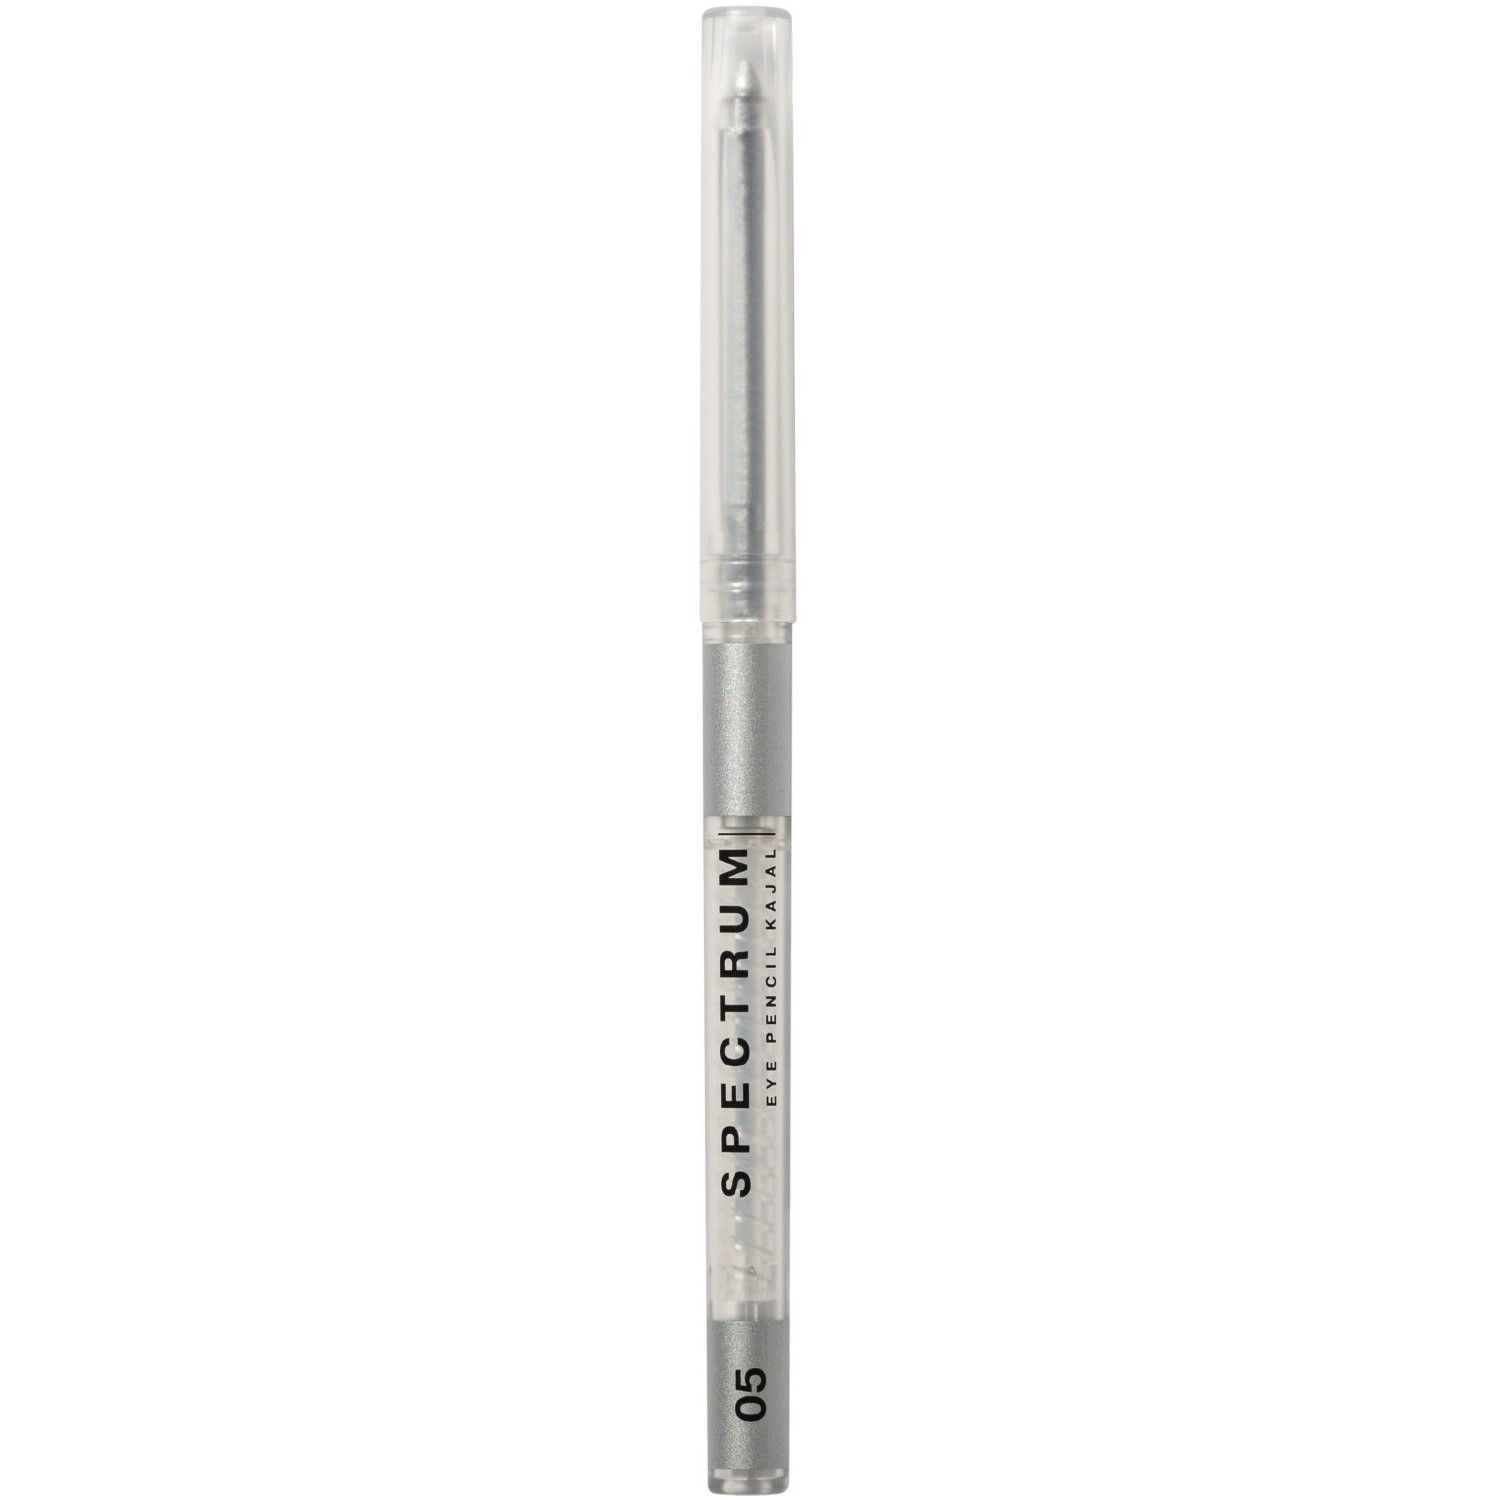 Карандаш для глаз Influence Beauty Spectrum автоматический, гелевый тон 05 0,28 г карандаш для глаз influence beauty spectrum автоматический тон 11